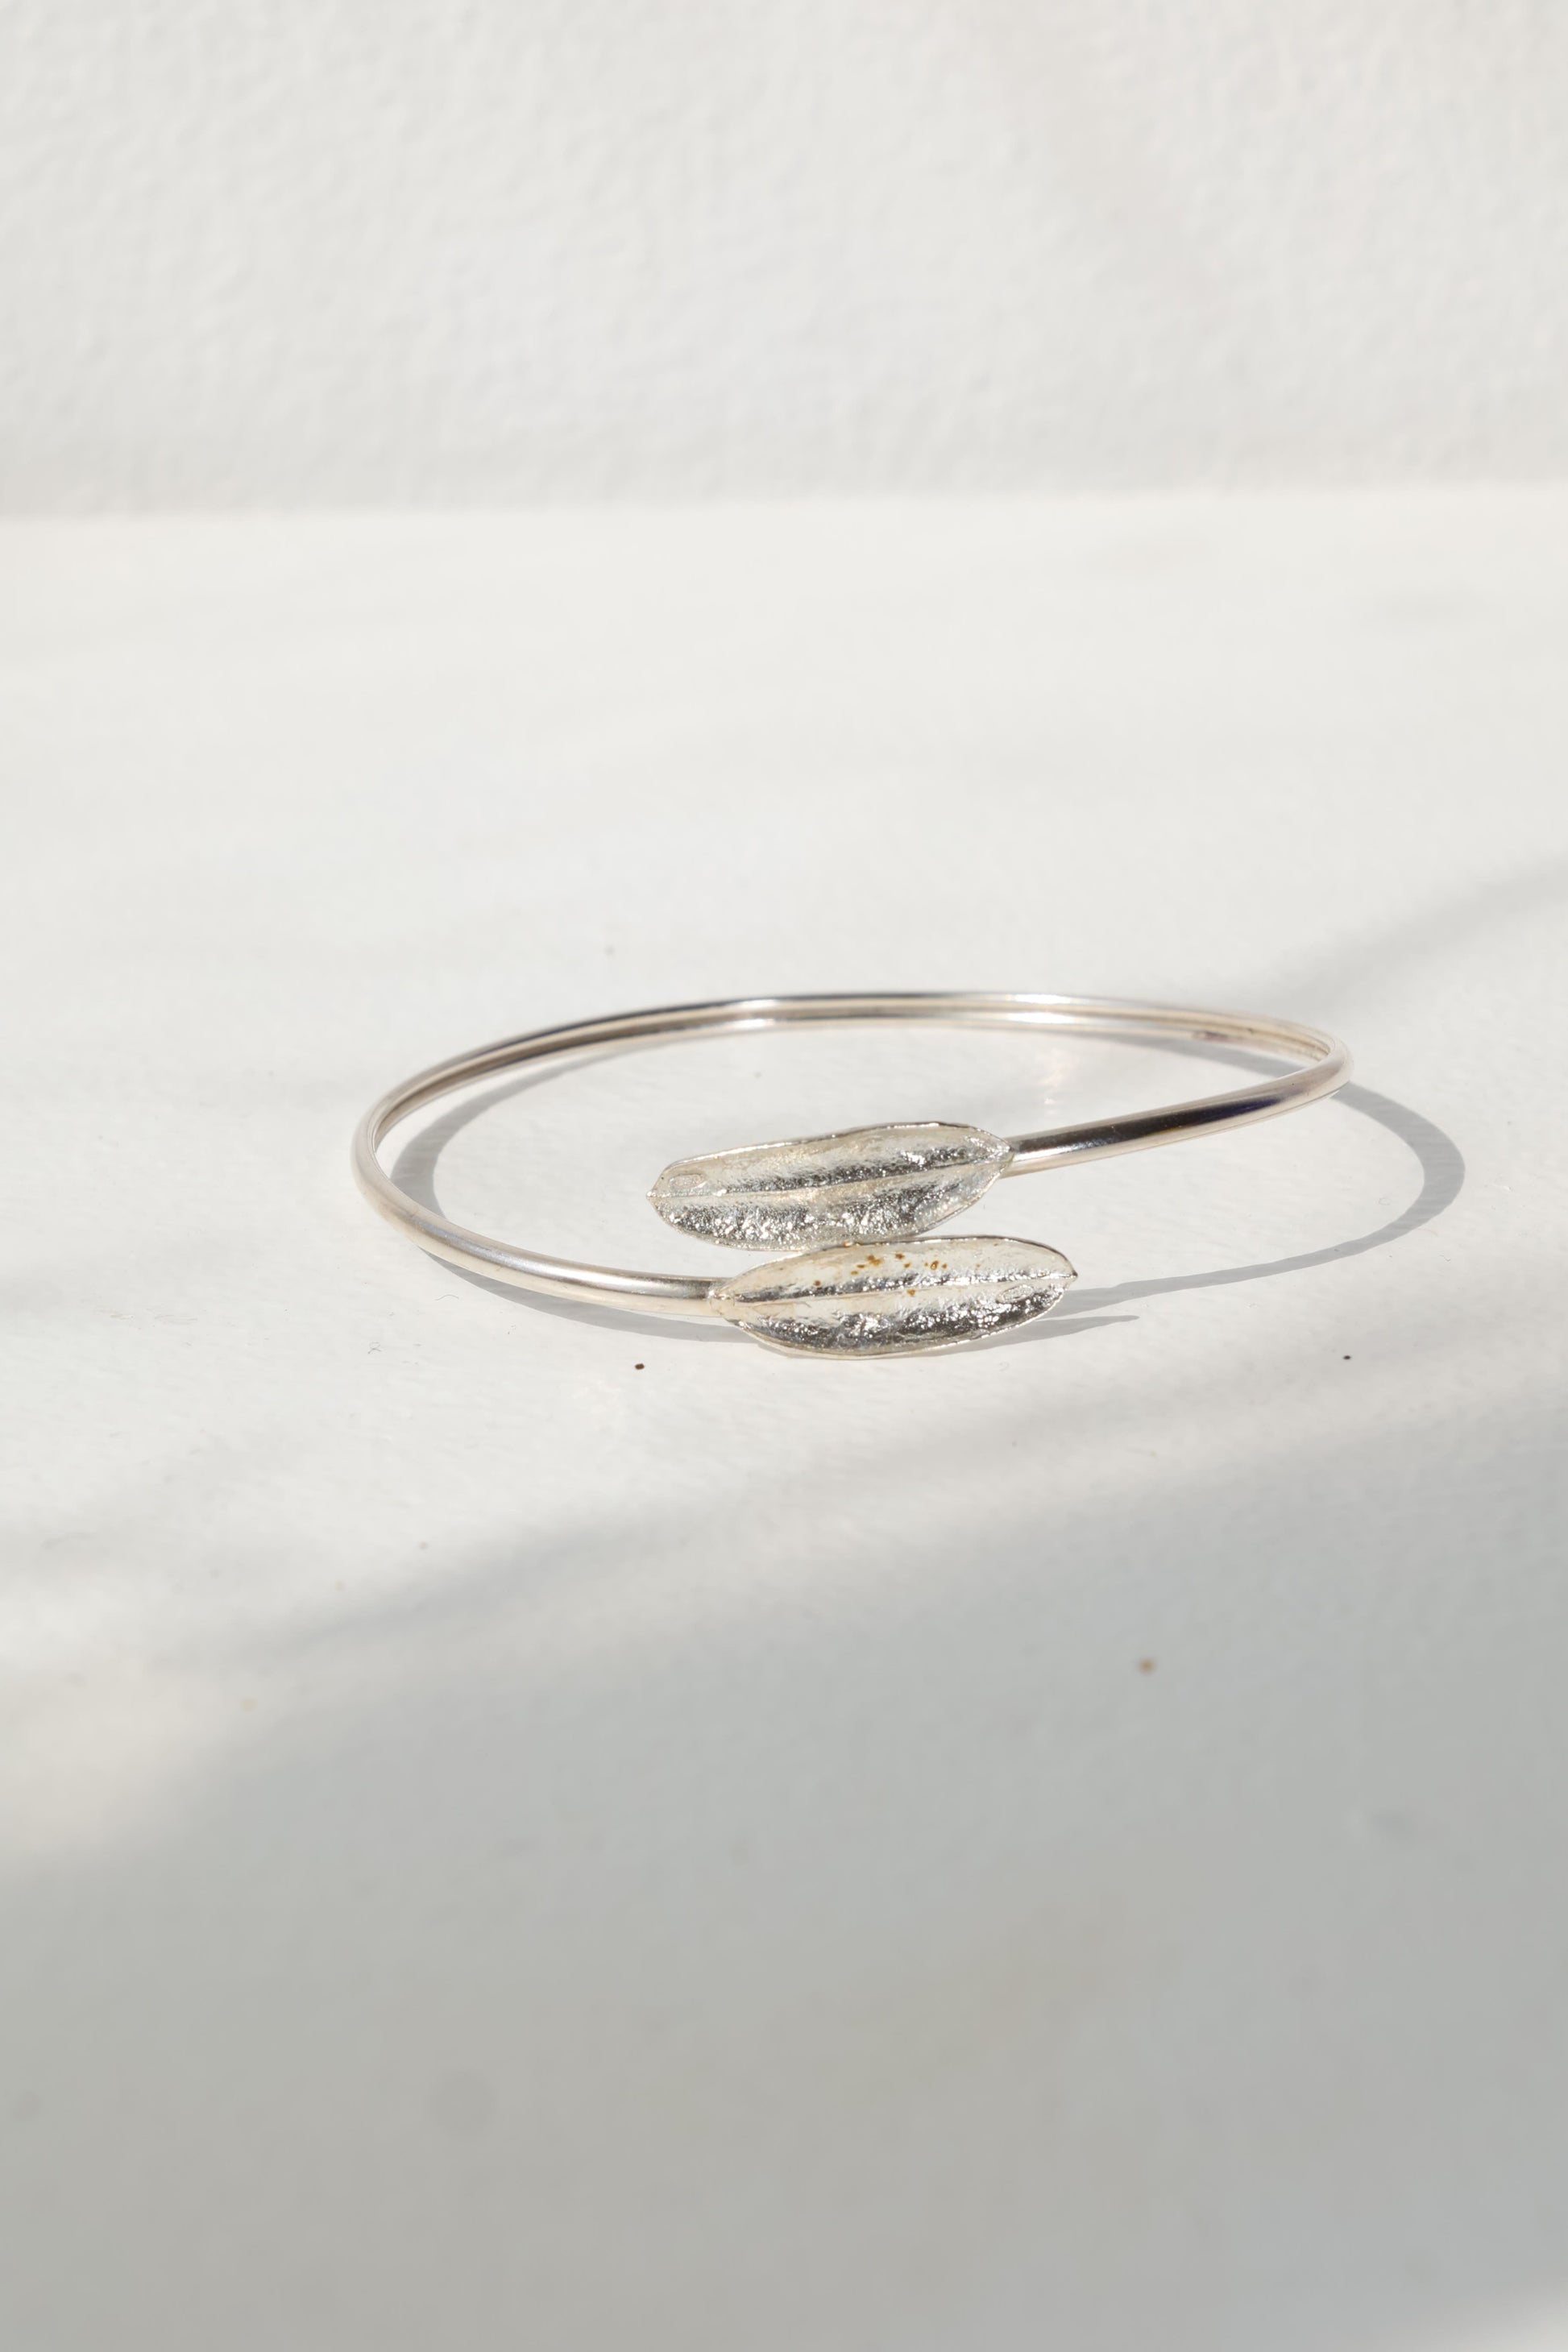 Olive-leaf-silver-bracelet-bethlehem-nadia